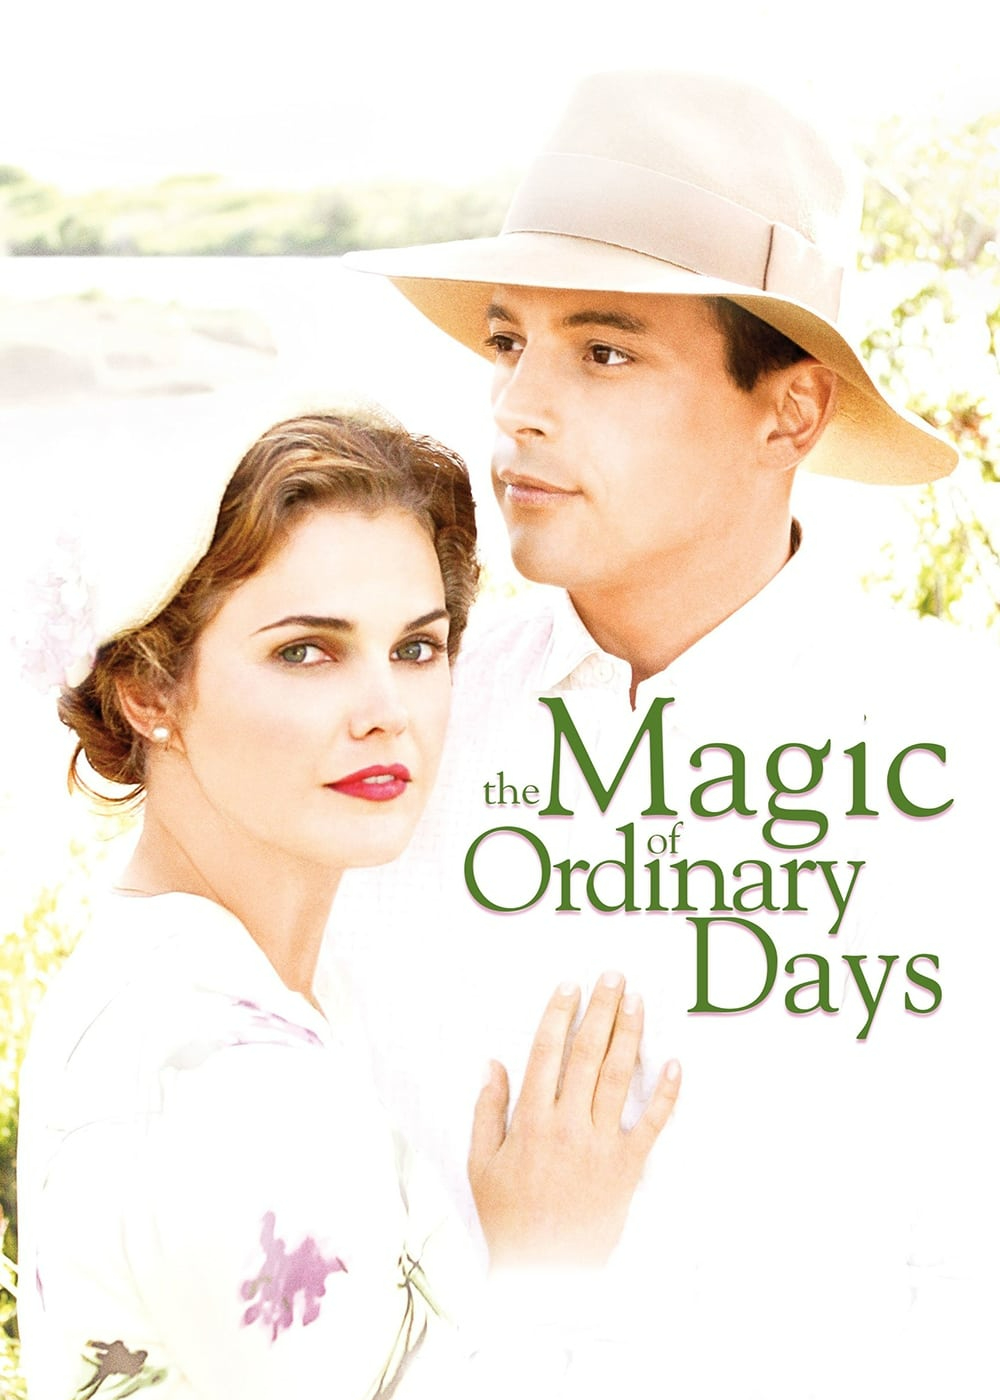 The Magic of Ordinary Days - The Magic of Ordinary Days